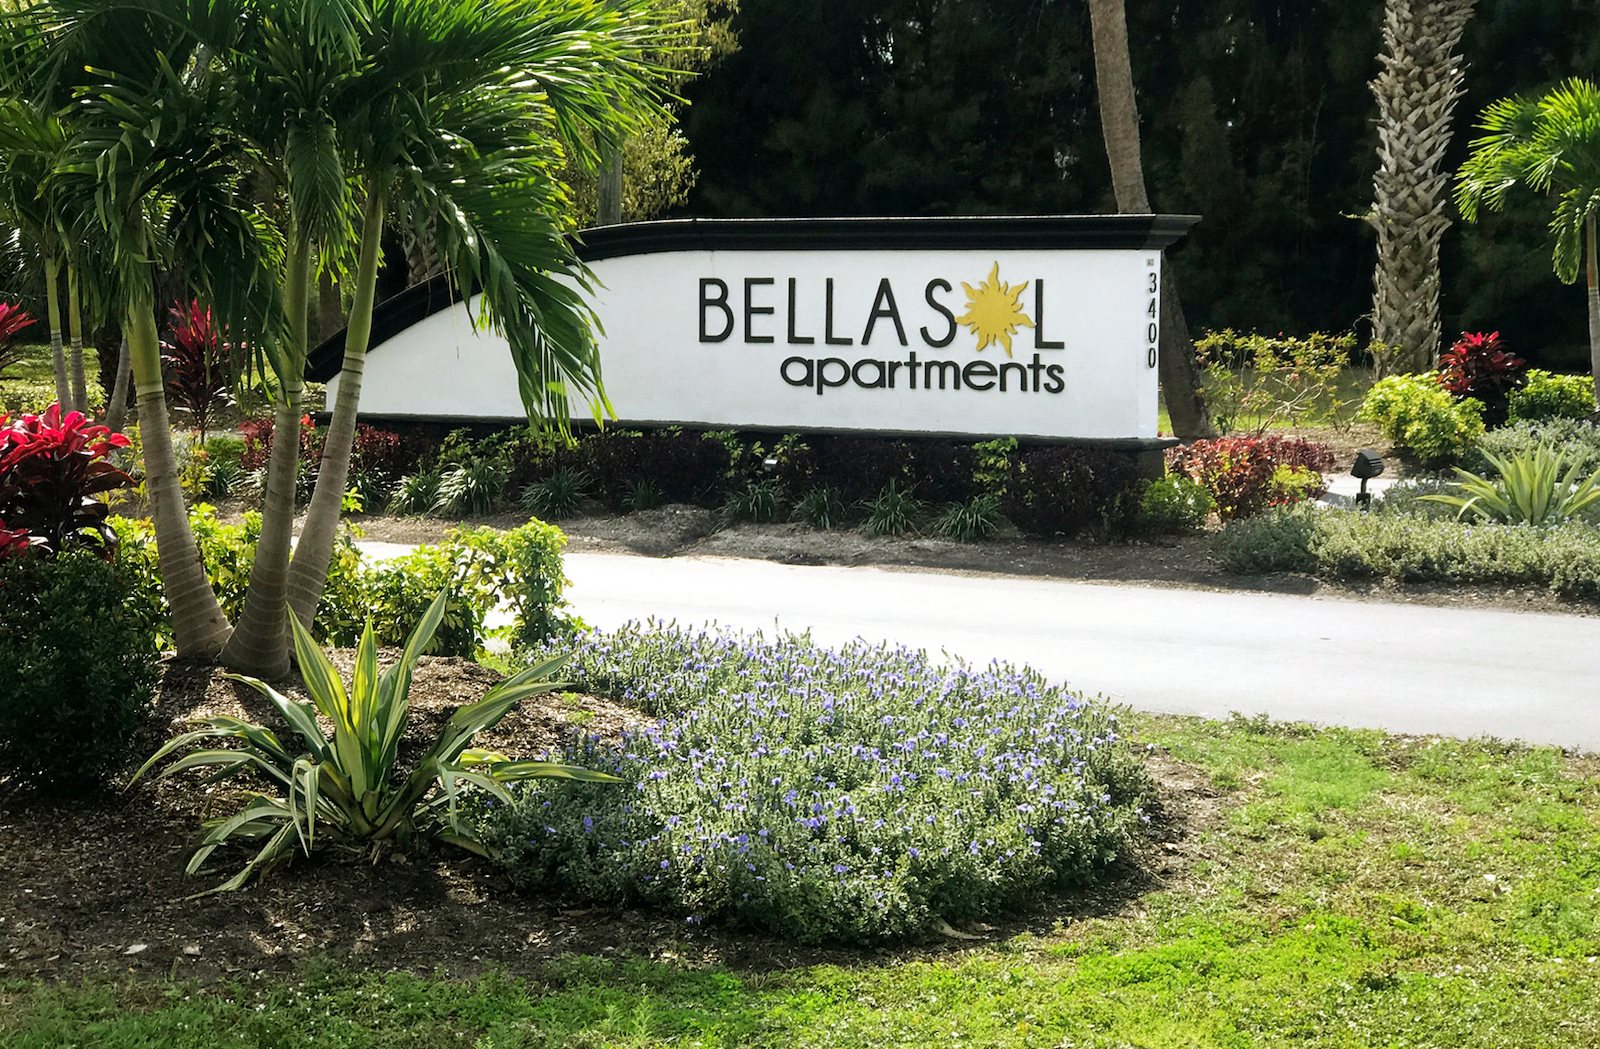 Bellasol Apartments entrance sign